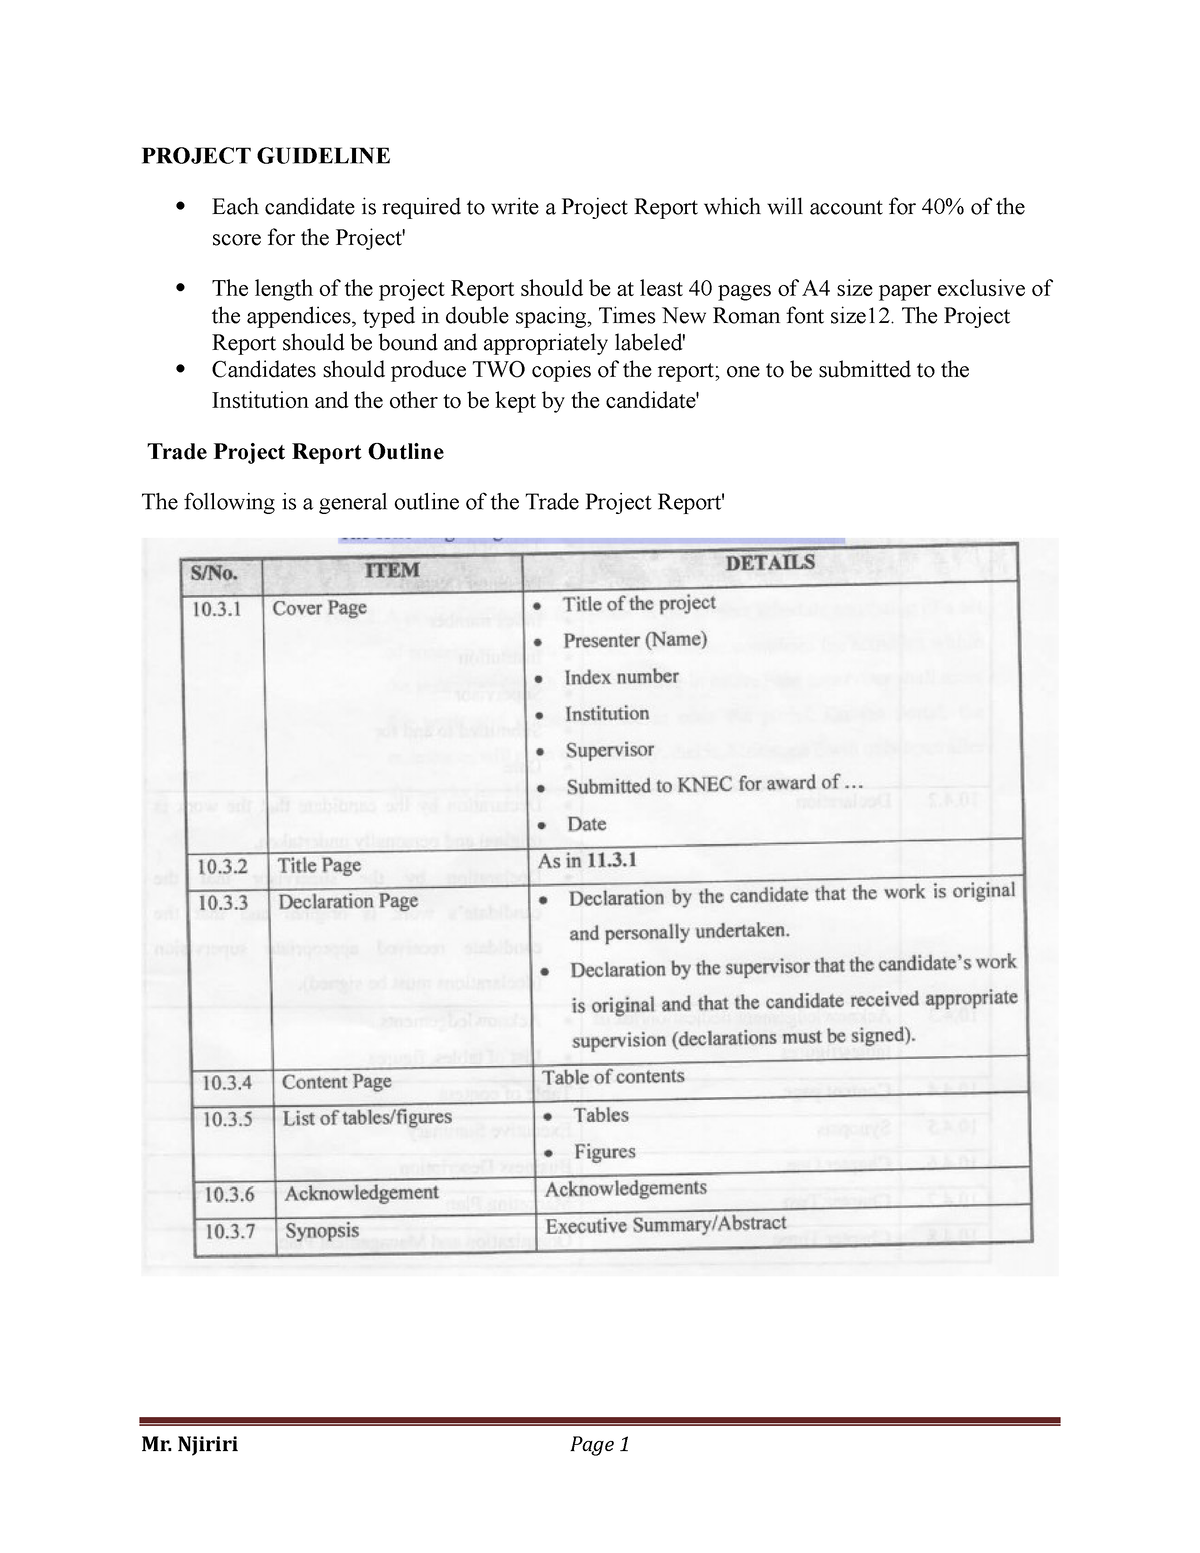 business plan pdf knec